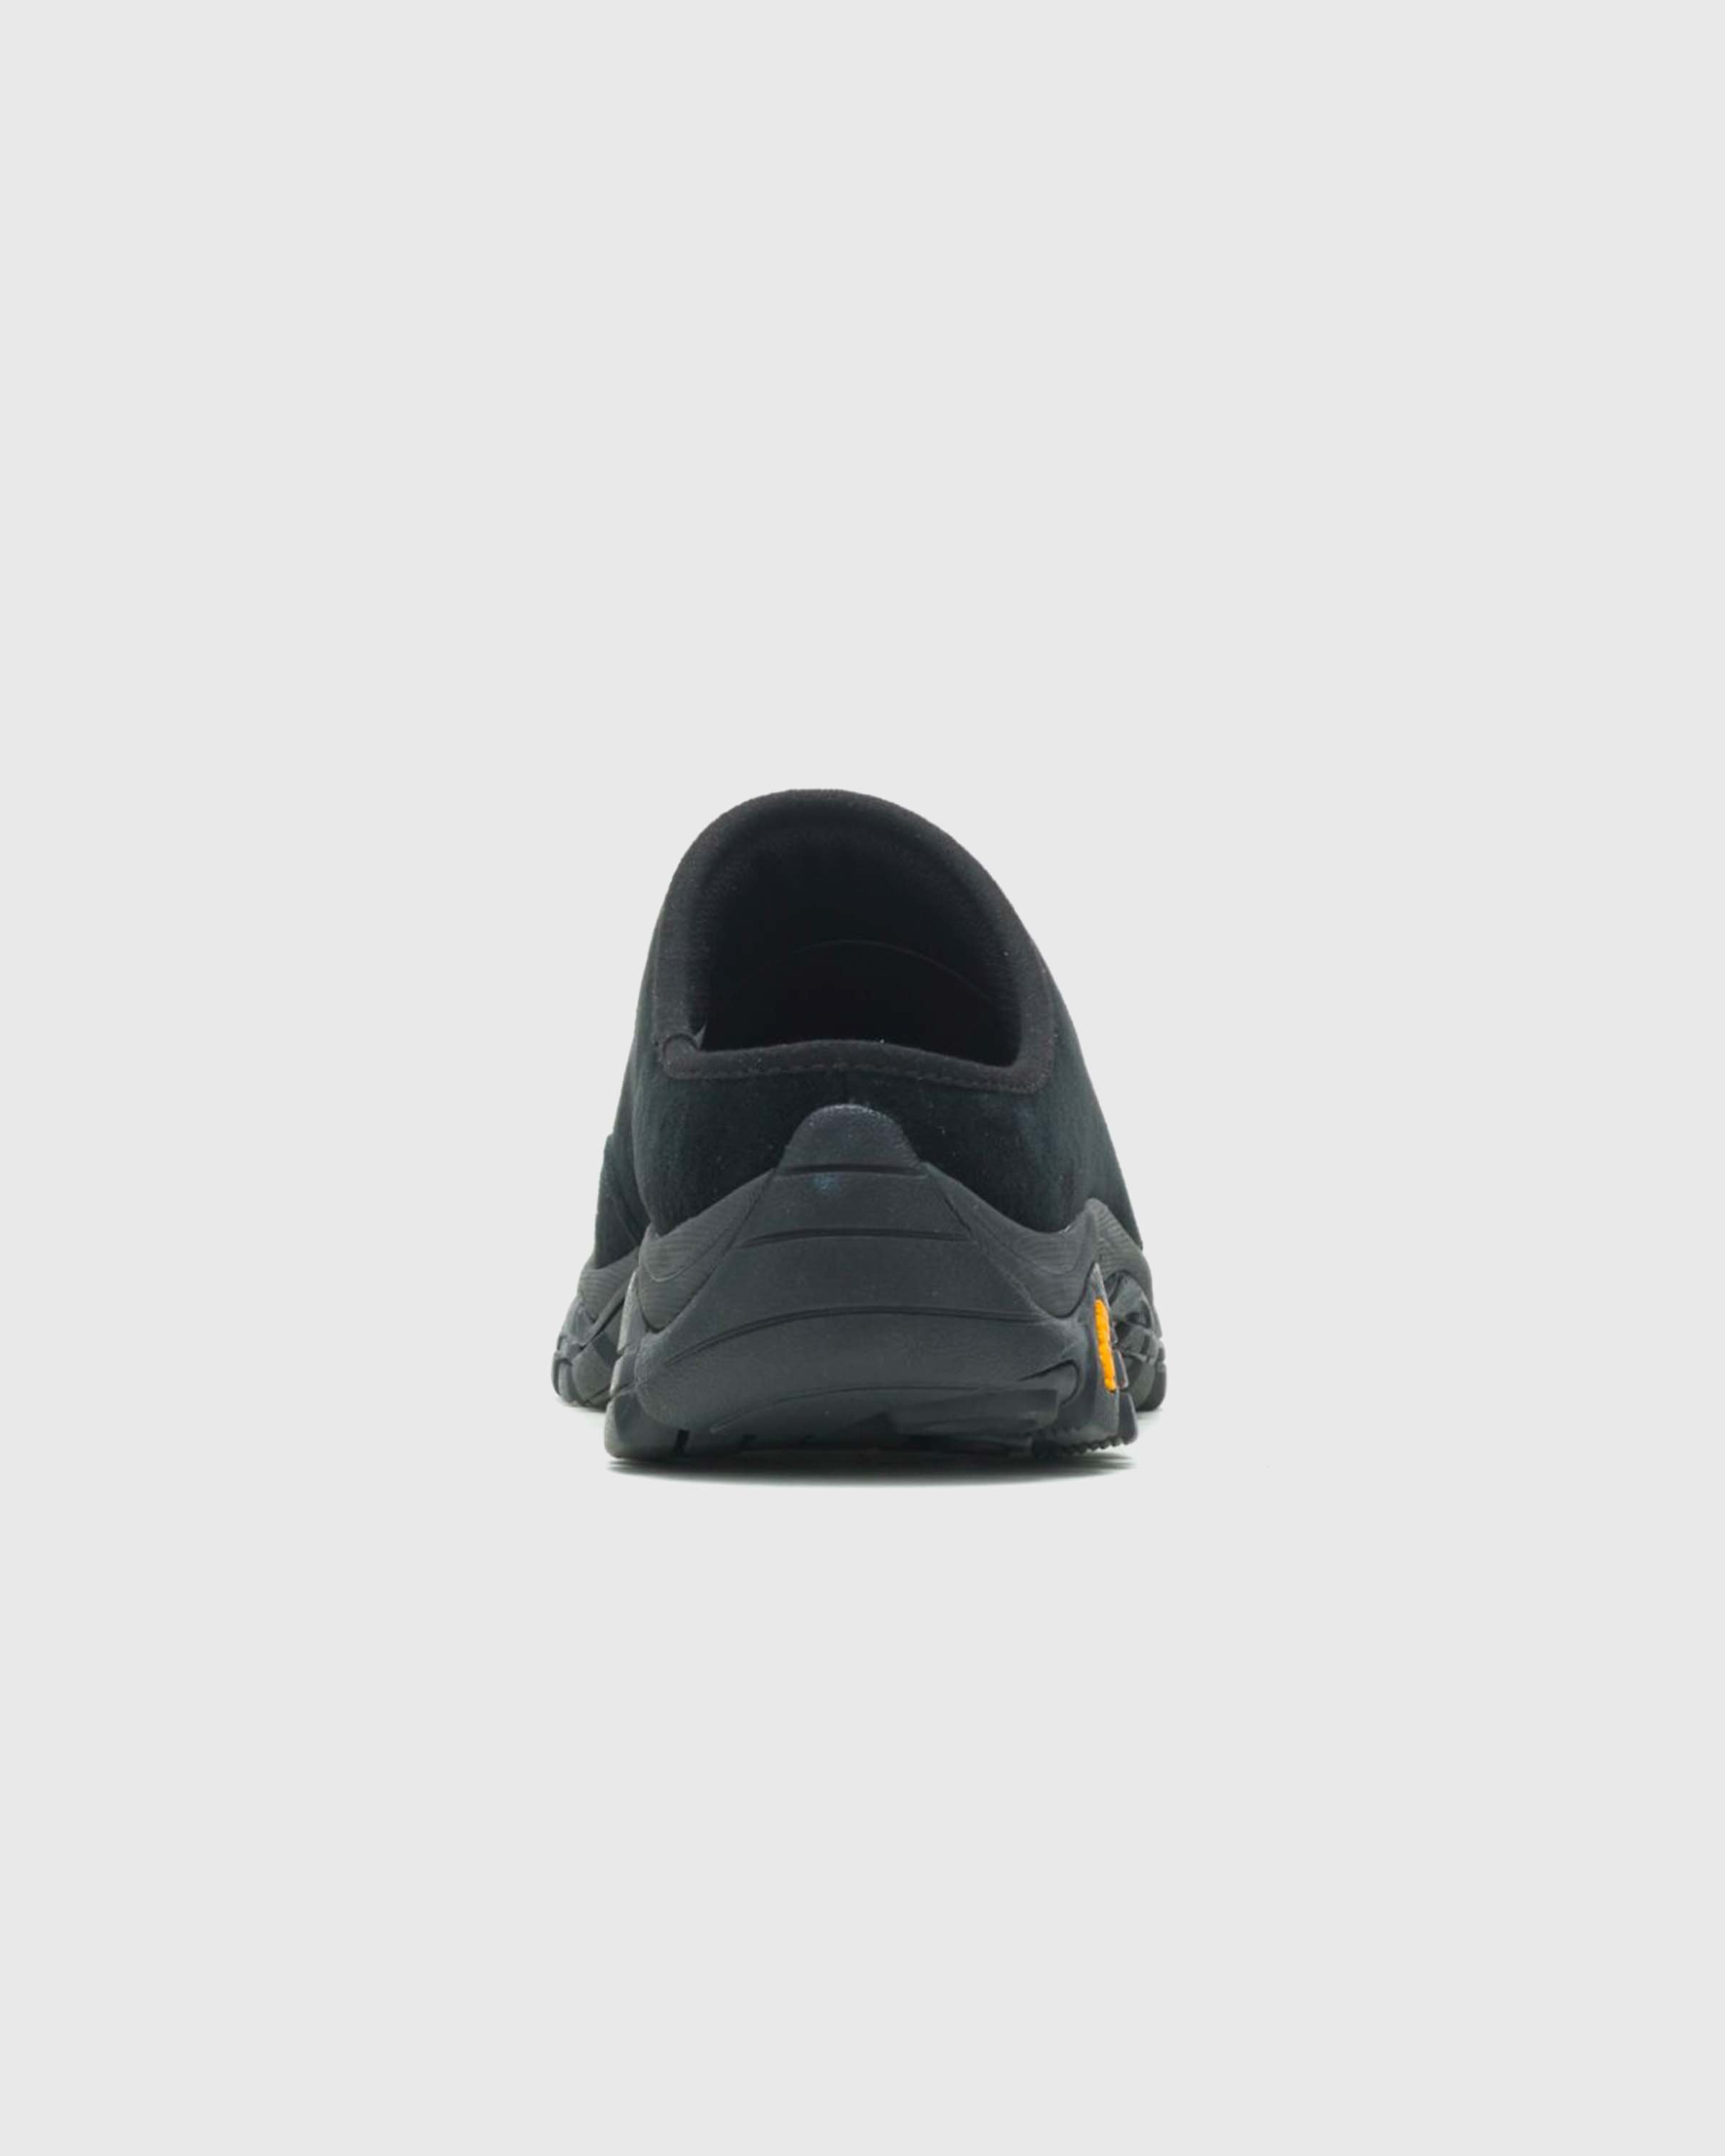 Merrell - Moab Retro Slide 1TRL Black - Footwear - Black - Image 3